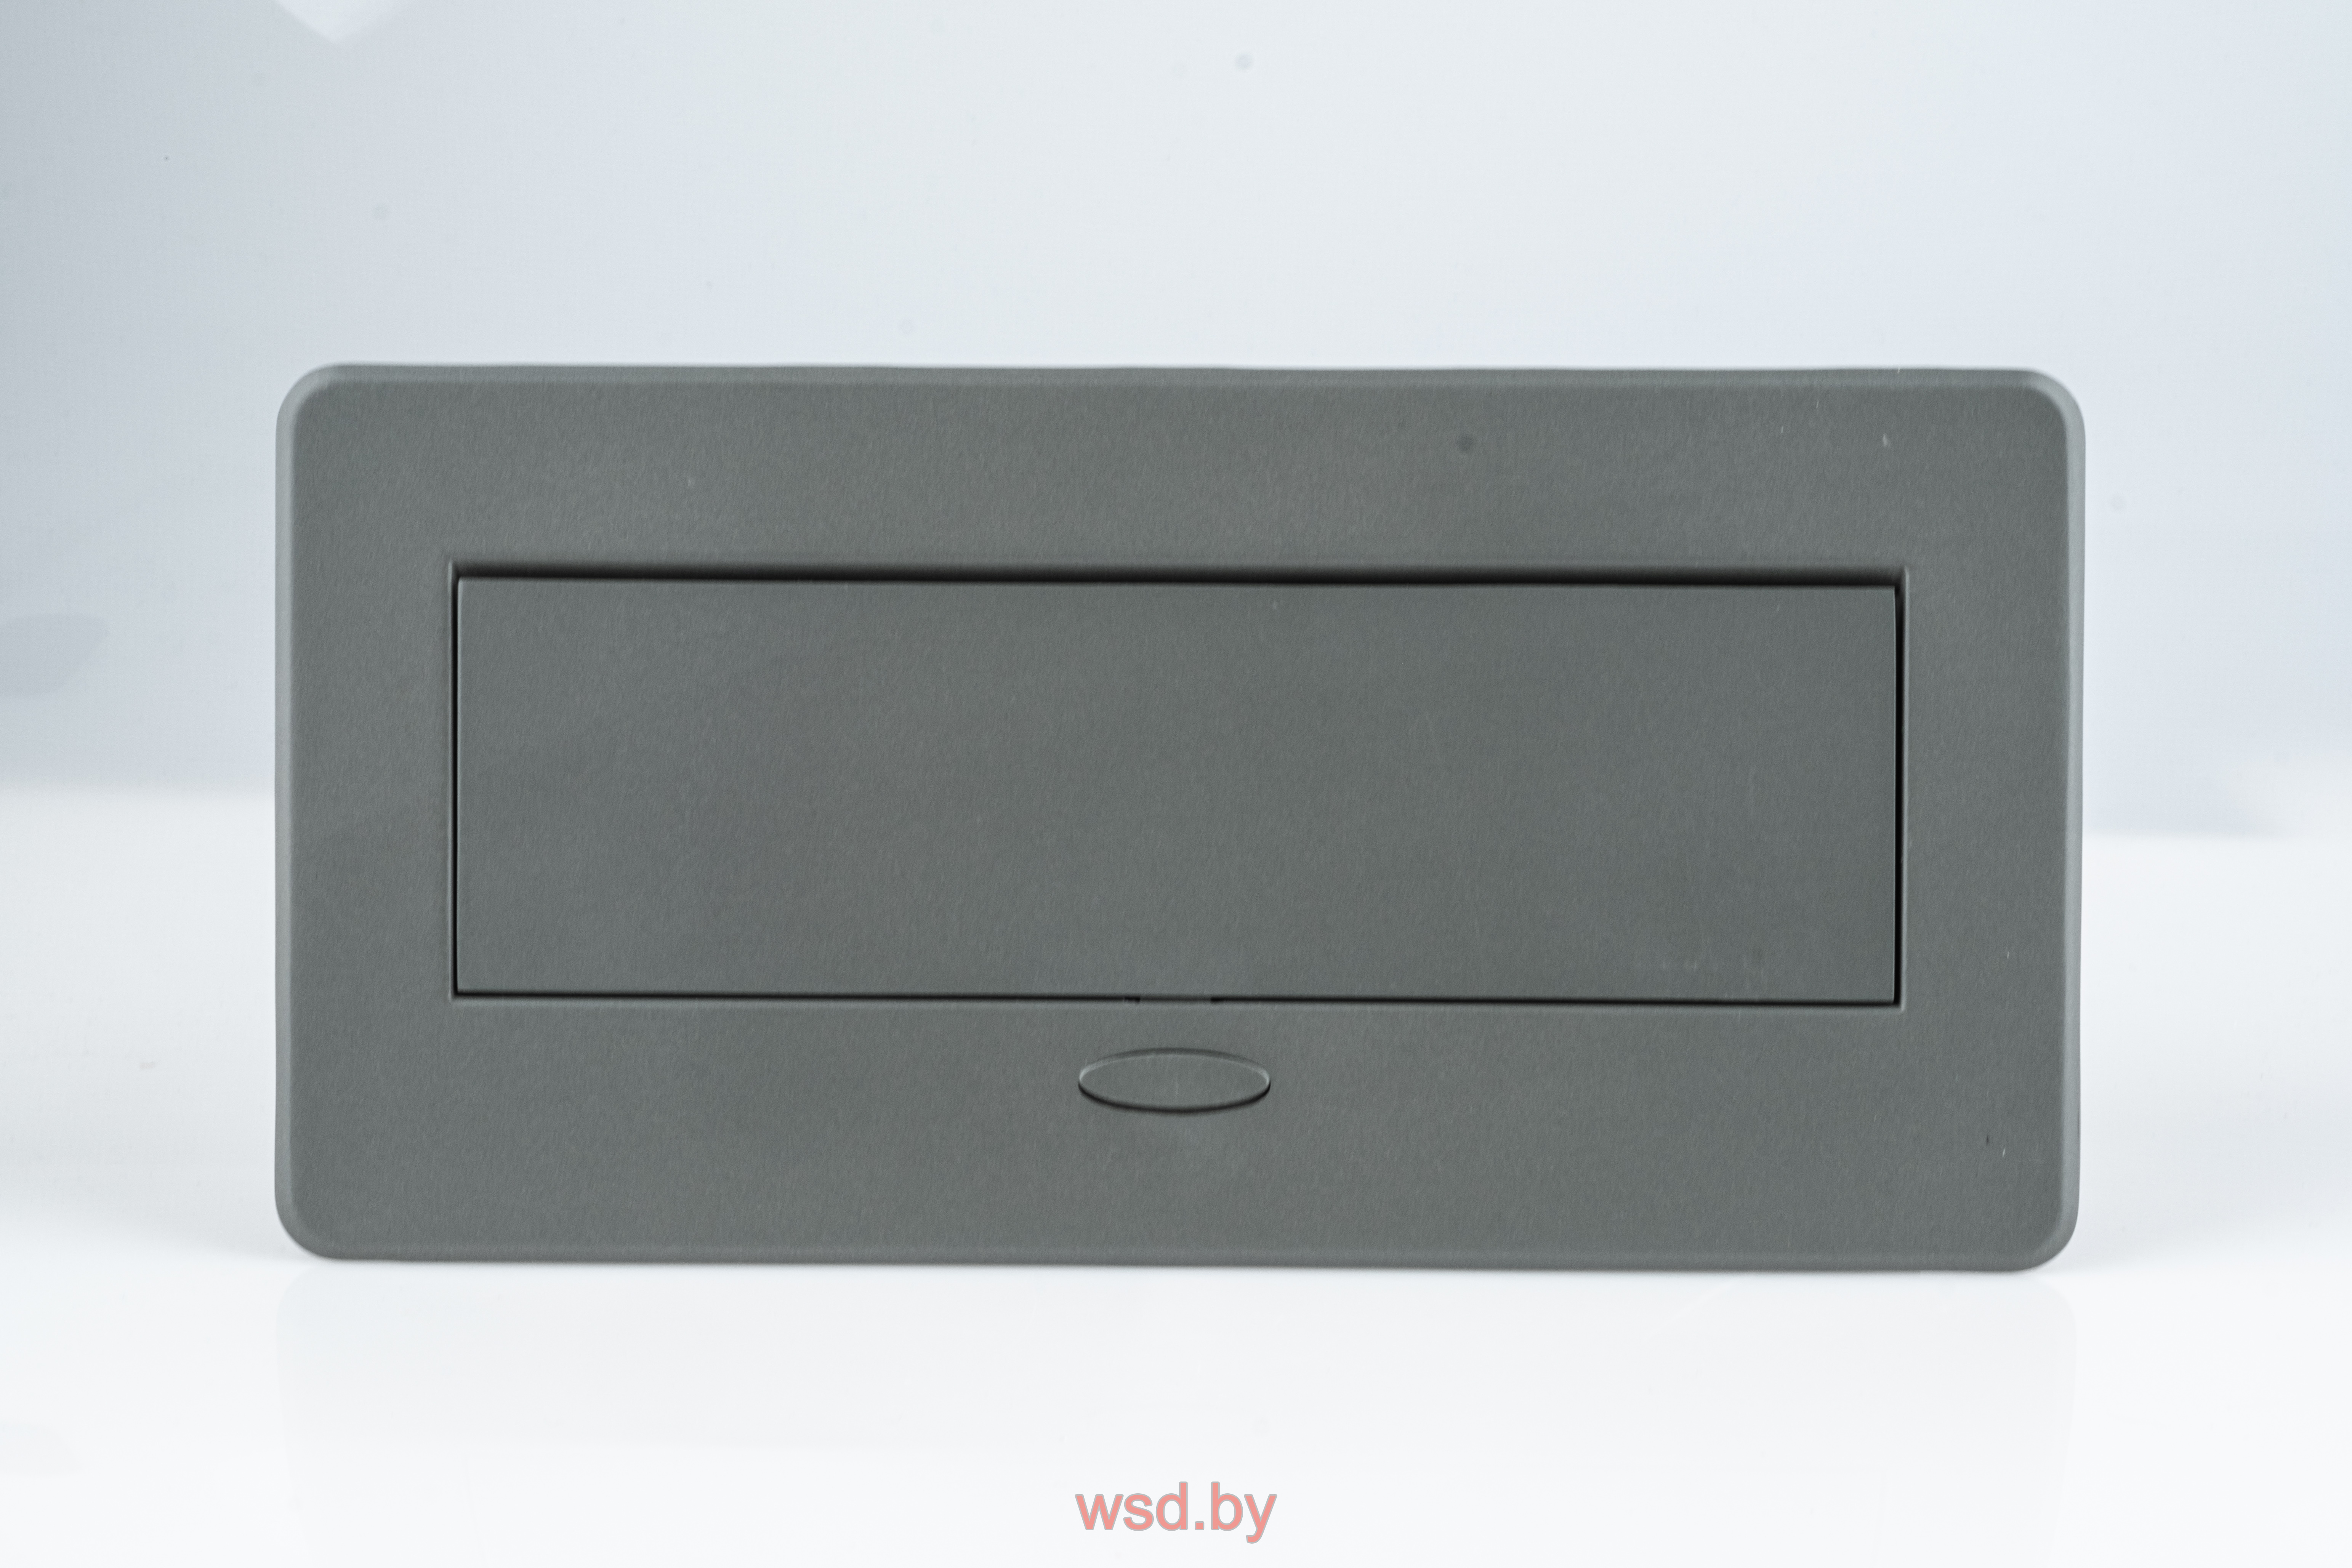 ORNO - Блок розеточный встраиваемый 2хUSB 5V 2,1A + 2x2P+E со шторками, без кабеля, 3600вт, закругленный край 2мм, графит. Фото N2